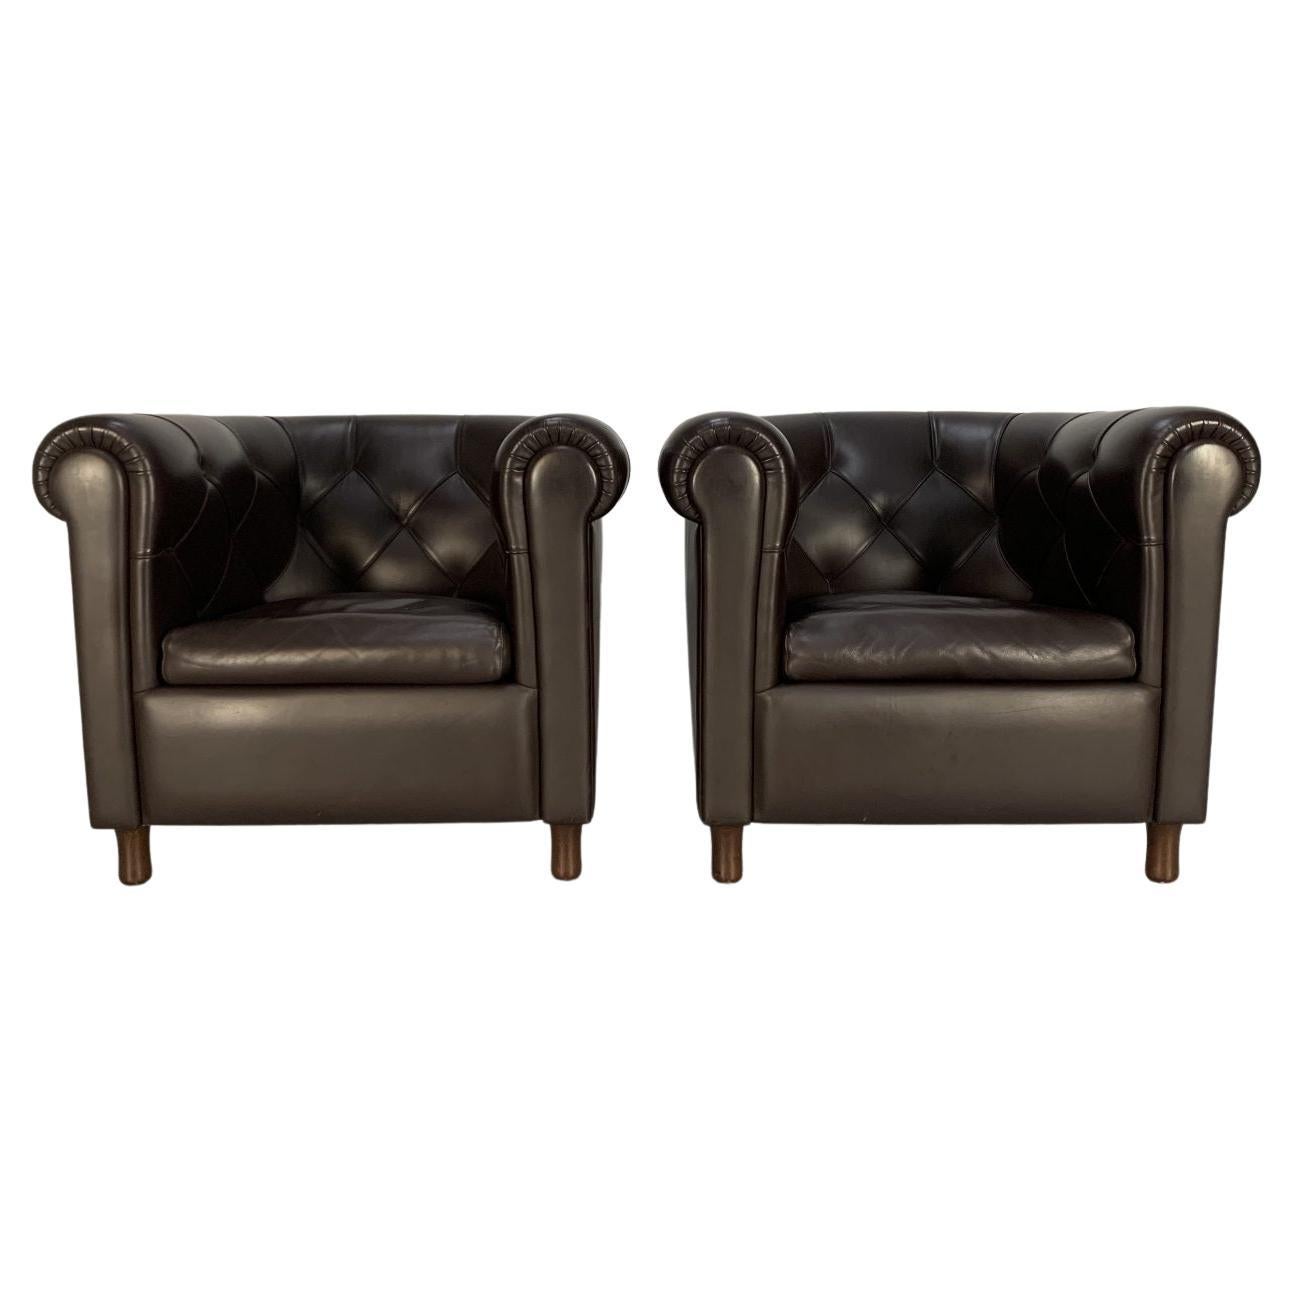 2 Poltrona Frau “Arcadia” Armchairs, in “Pelle Frau” Dark Brown Leather